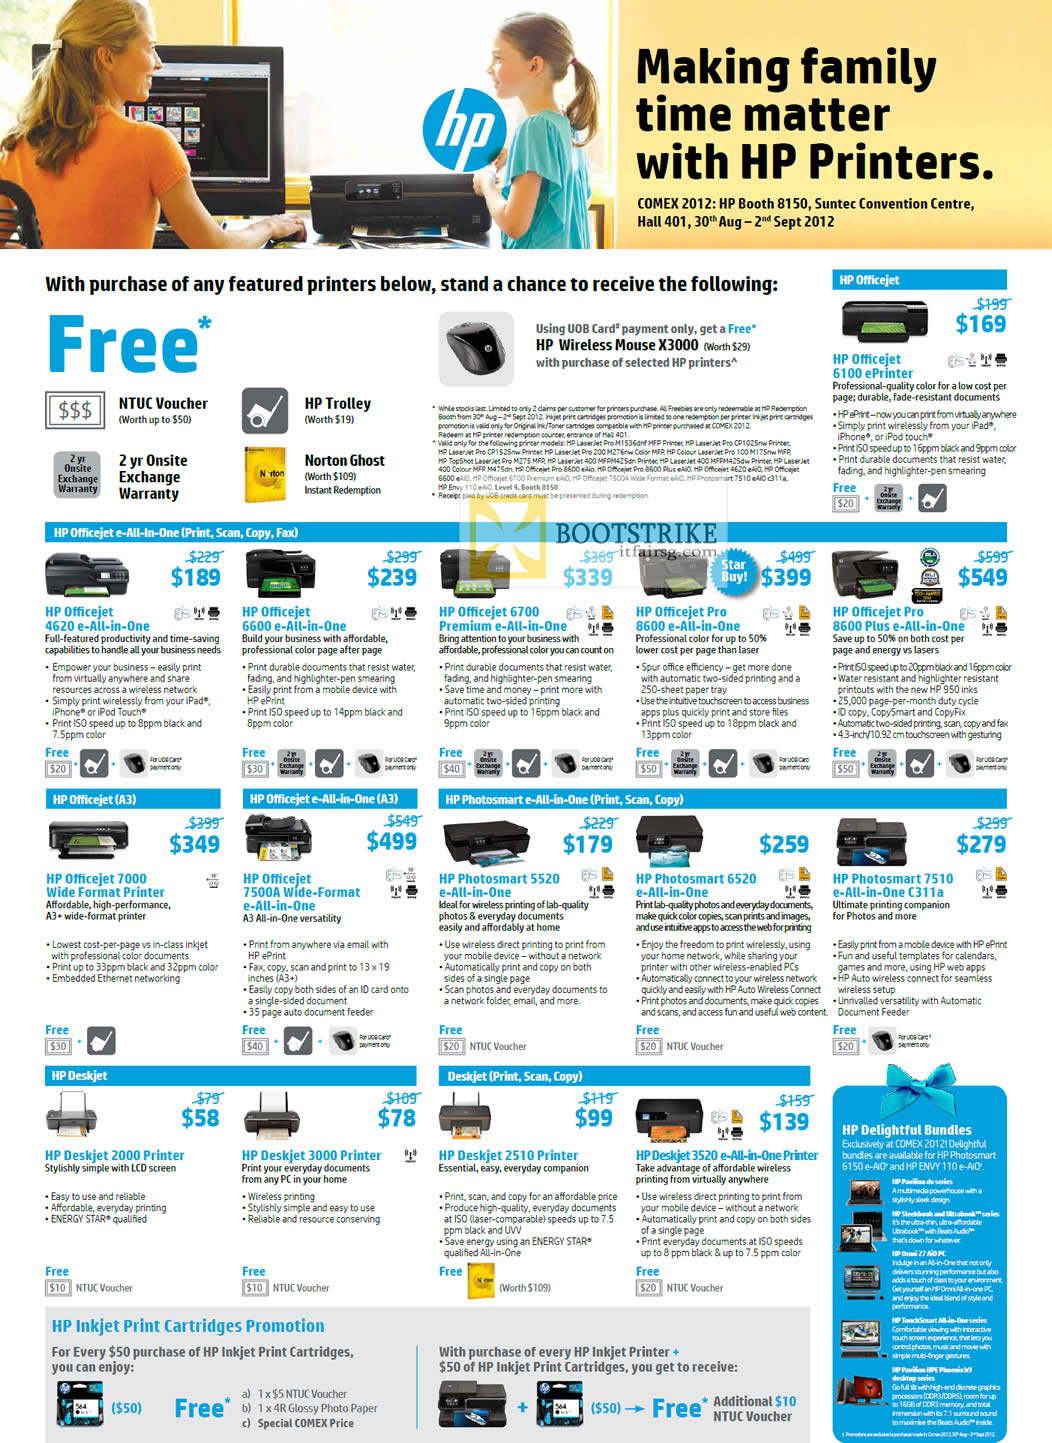 COMEX 2012 price list image brochure of HP Printers Inkjet Officejet 6100, 4620, 6600, 6700, 8600 Plus, 7000, 7500A, 5520, 6520, 7510 C311a, Deskjet 2000, 3000, 2510, 3520